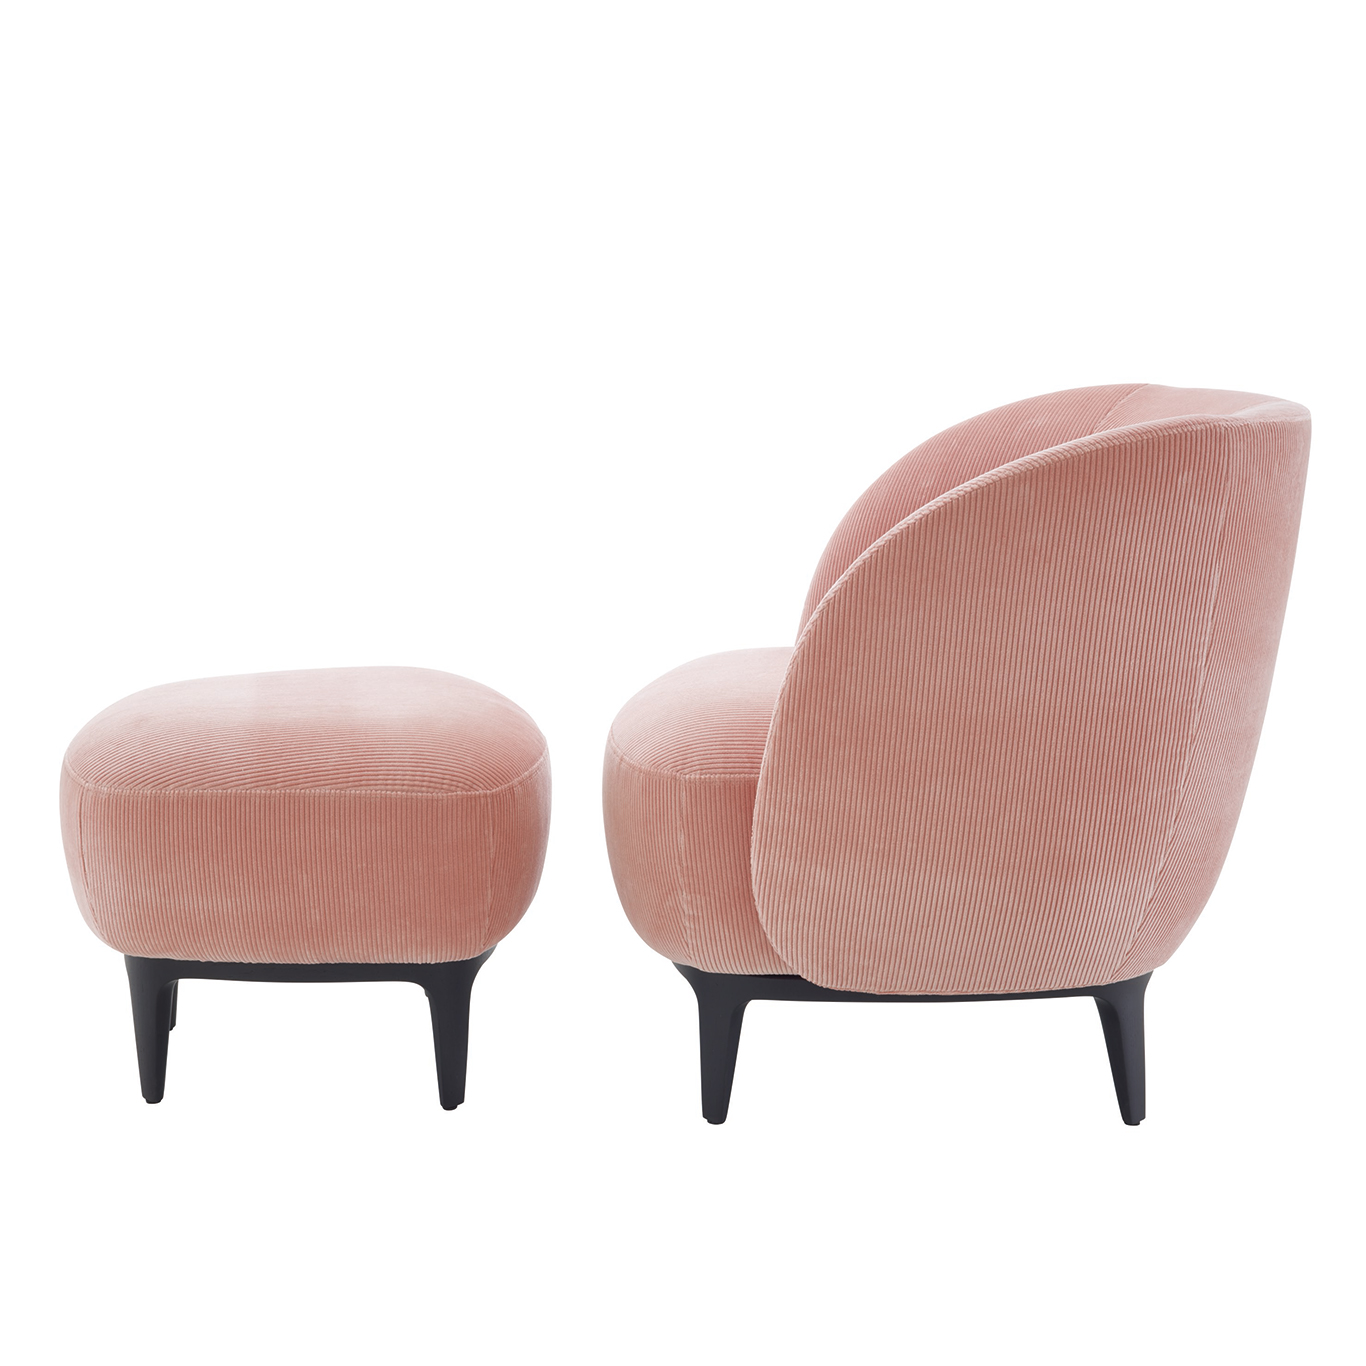 Soufflot seating range for Ligne Roset, armchair and pouffe, interior design, interior architecture, object design, designer, furniture creation, studio jean-philippe nuel